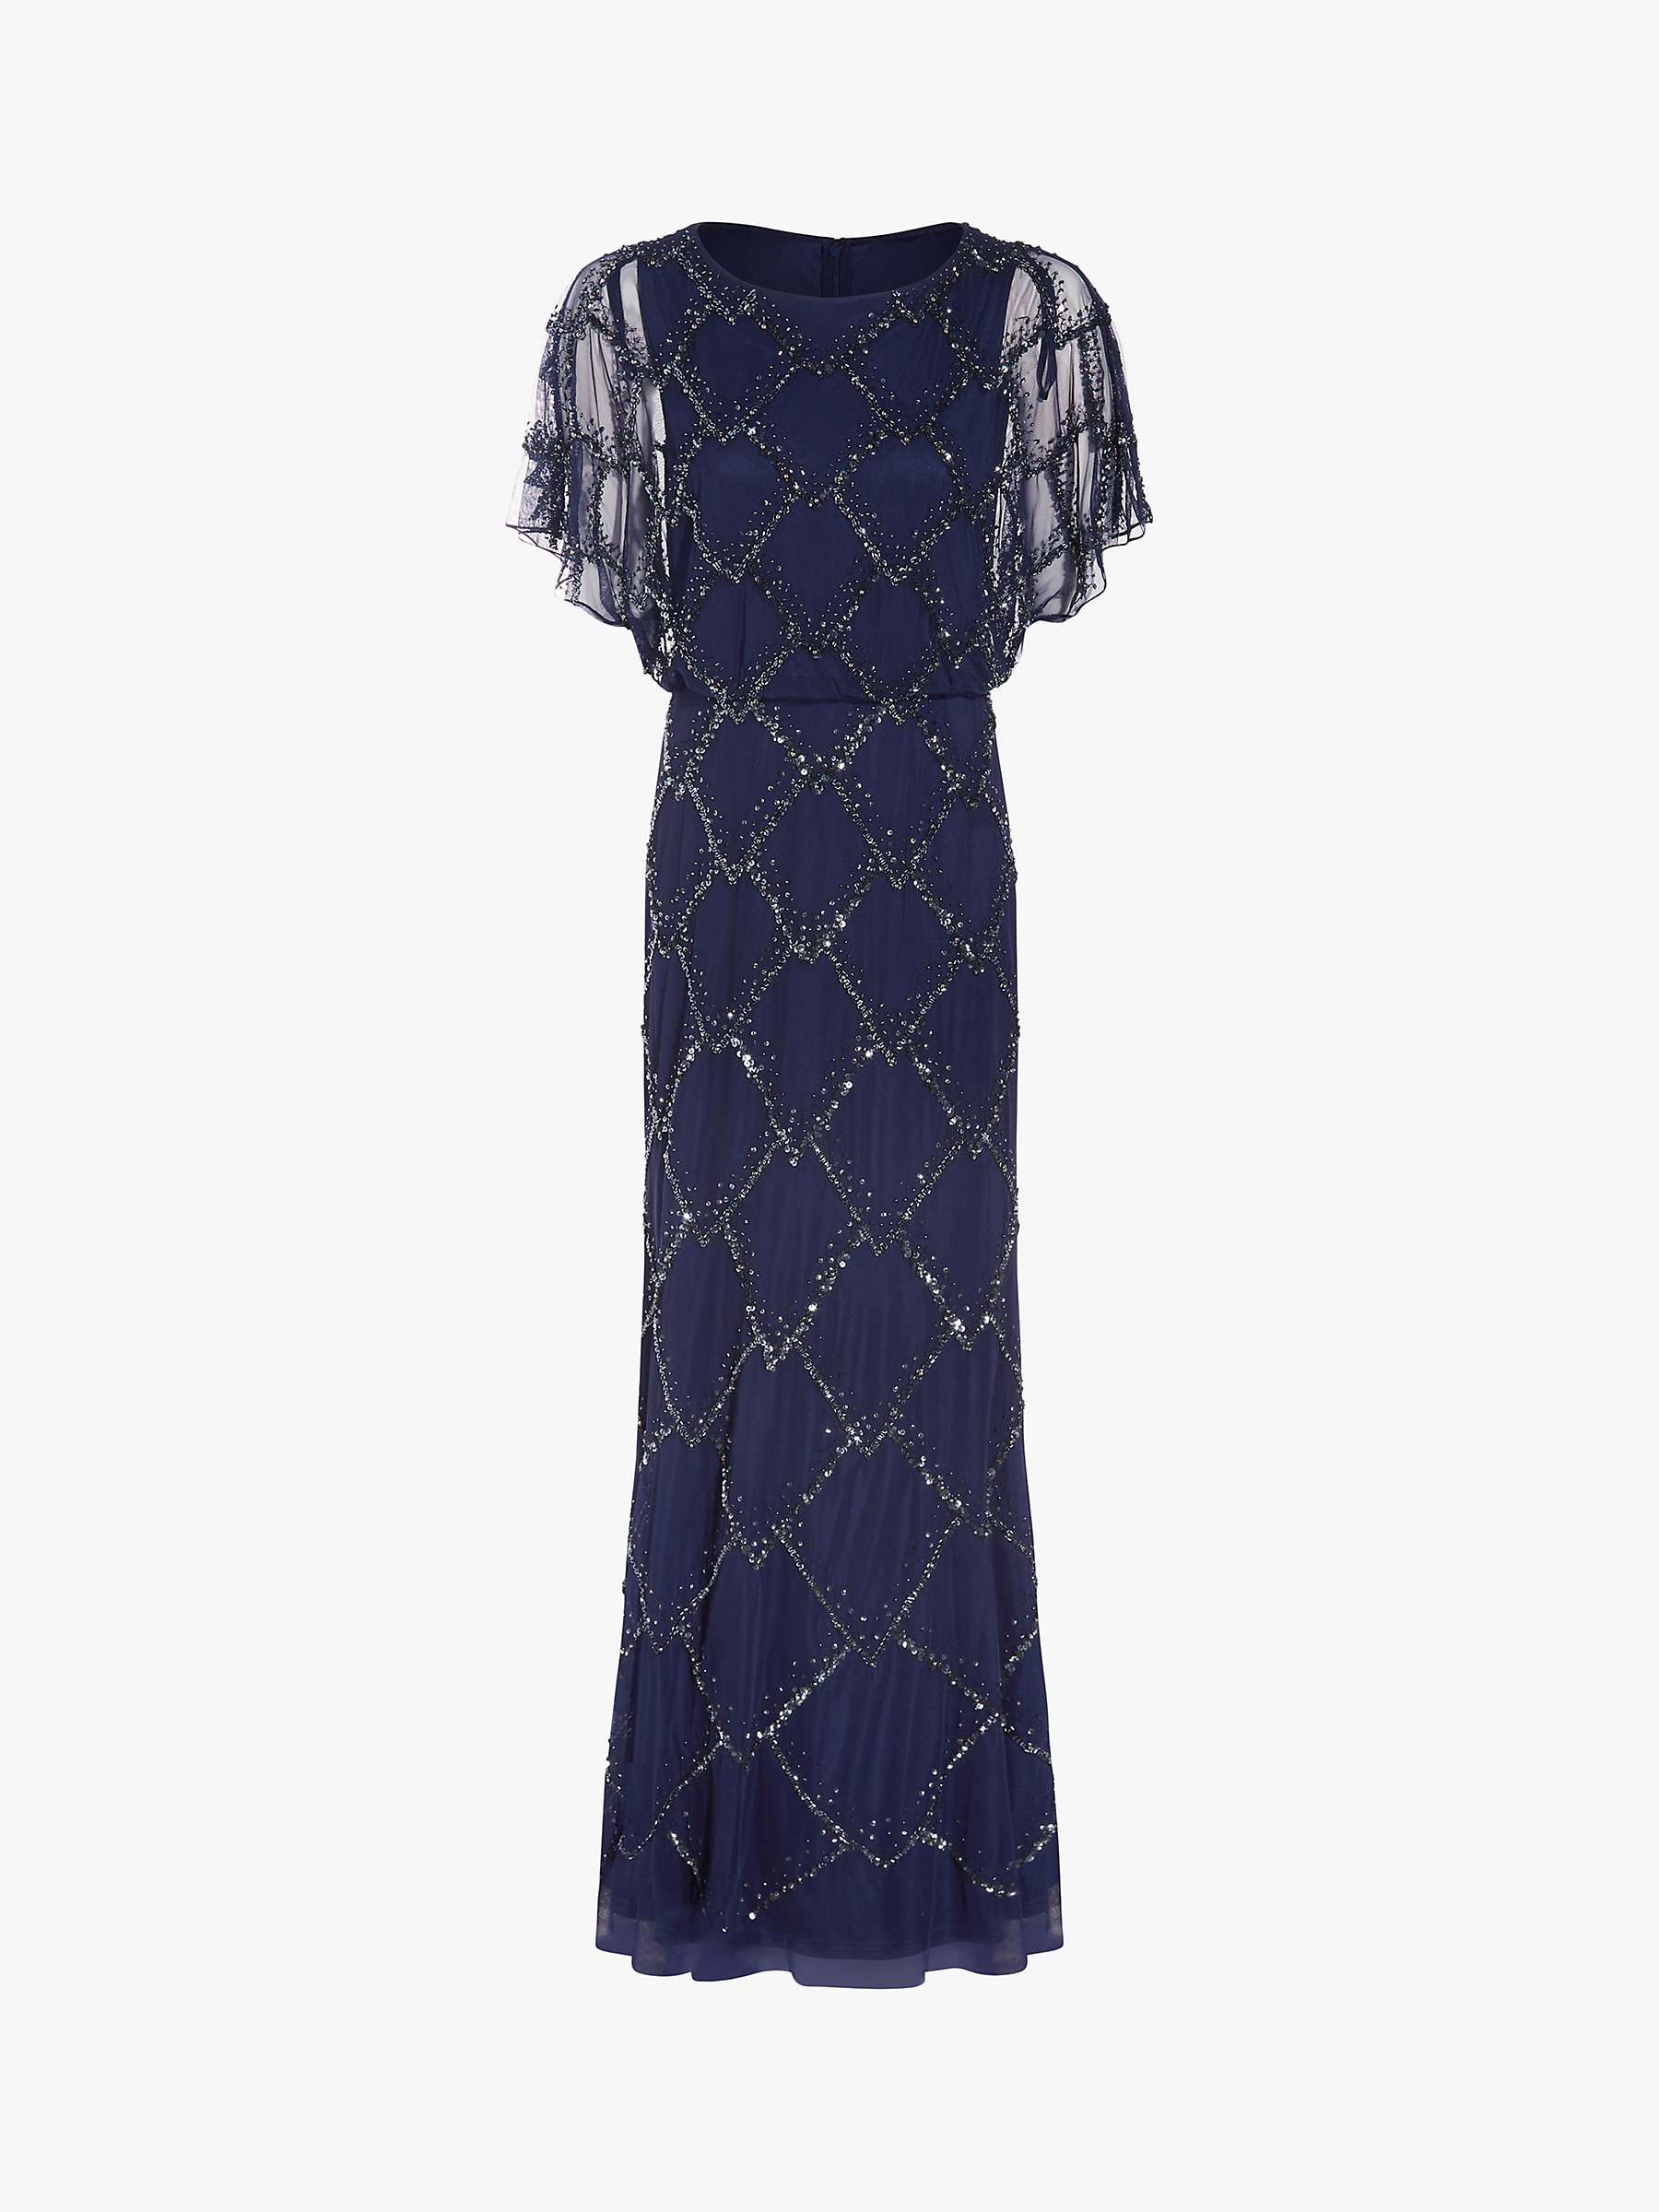 Buy Adrianna Papell Beaded Blouson Dress, Navy Online at johnlewis.com